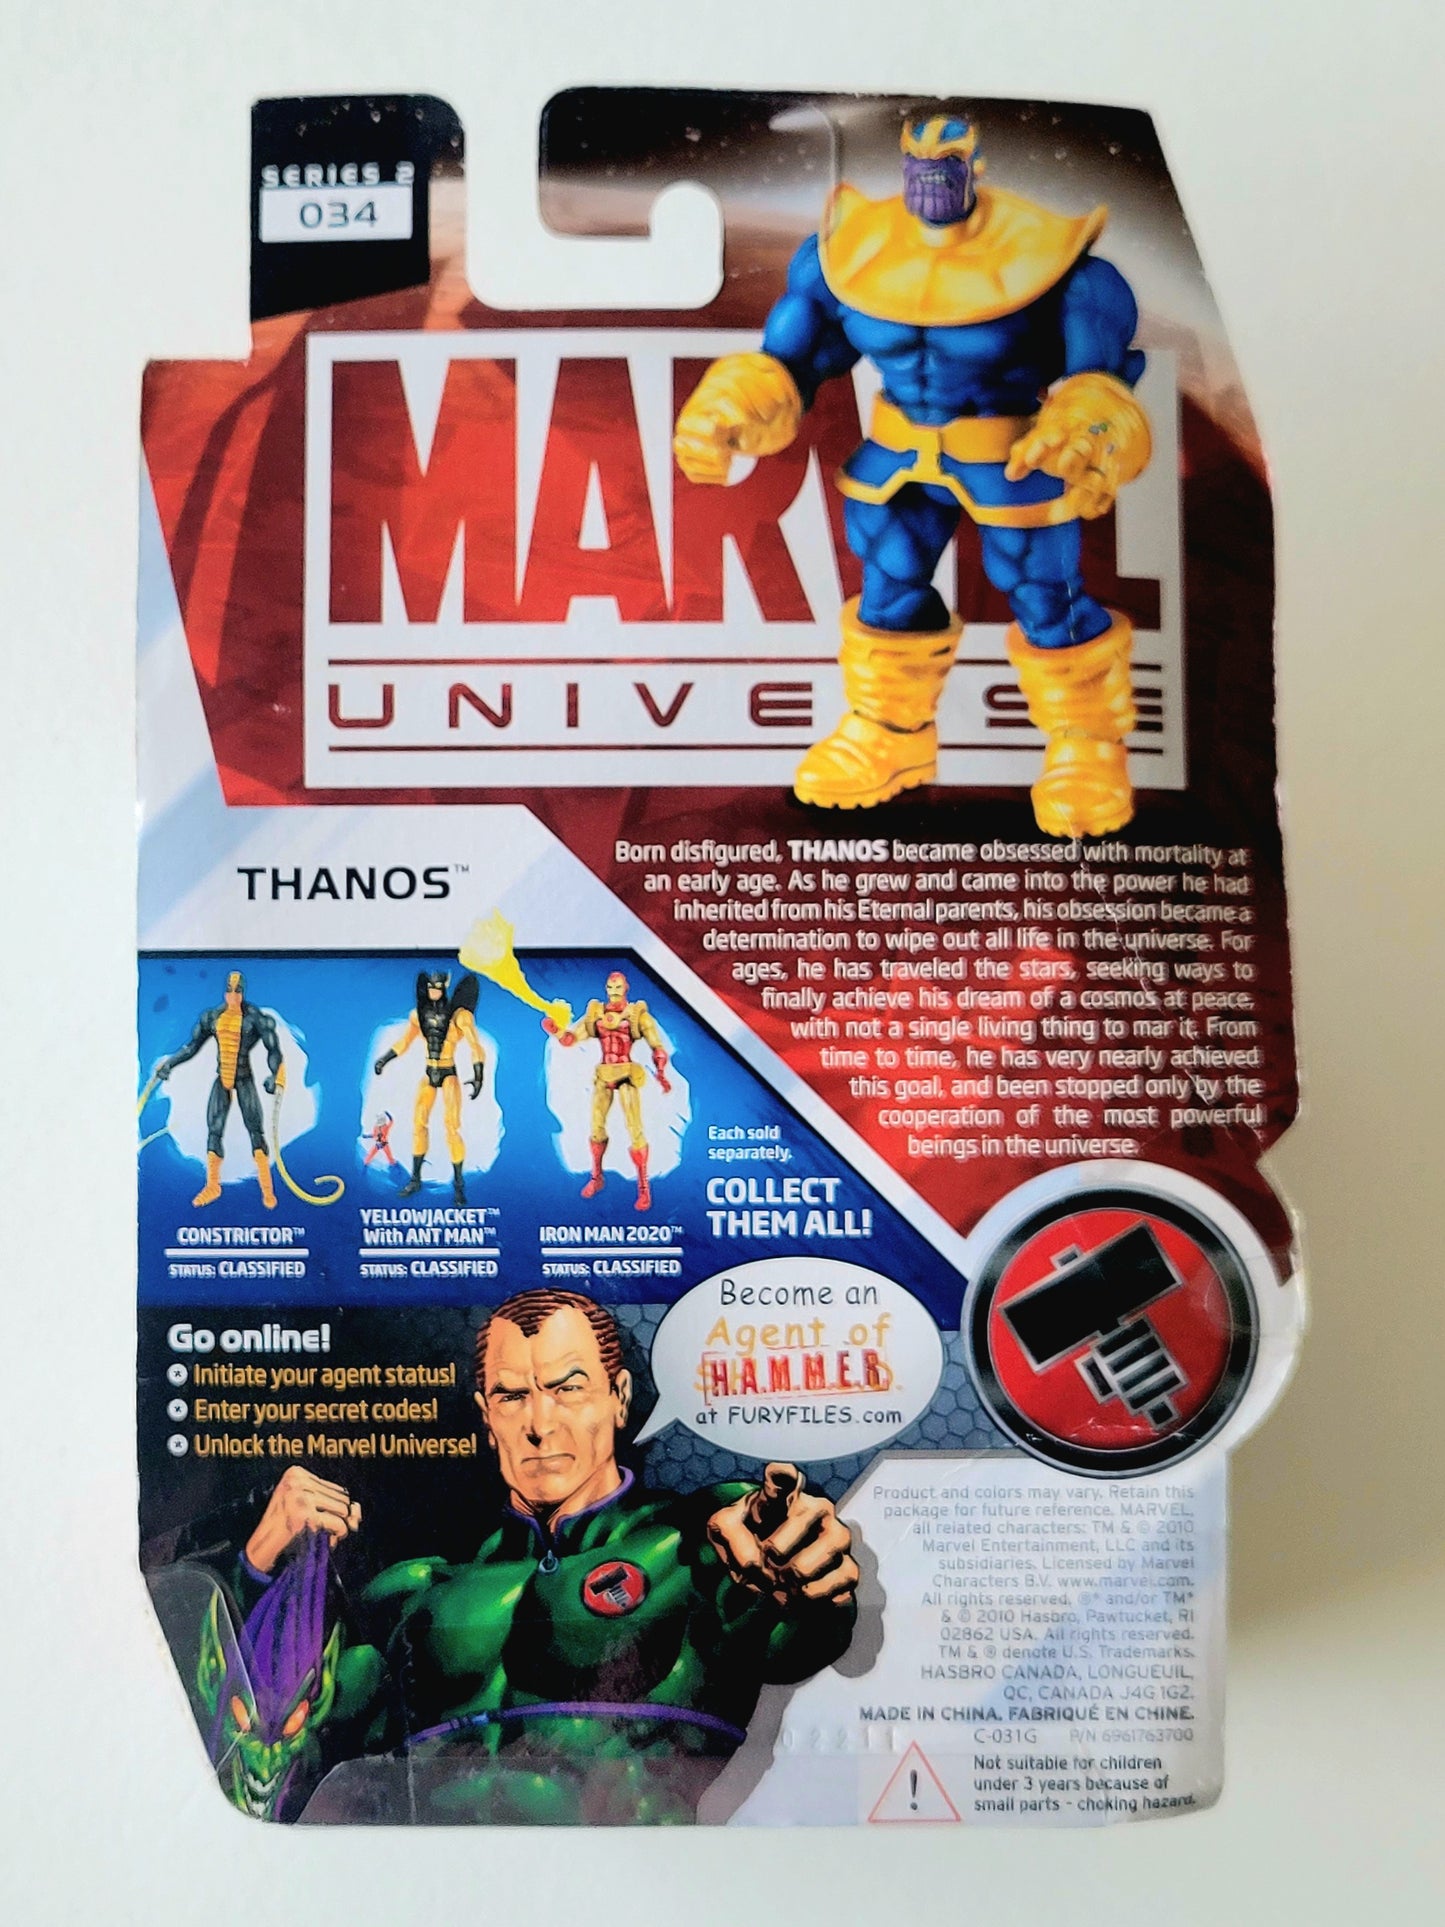 Marvel Universe Series 2 Figure 34 Thanos (with alternate hand)